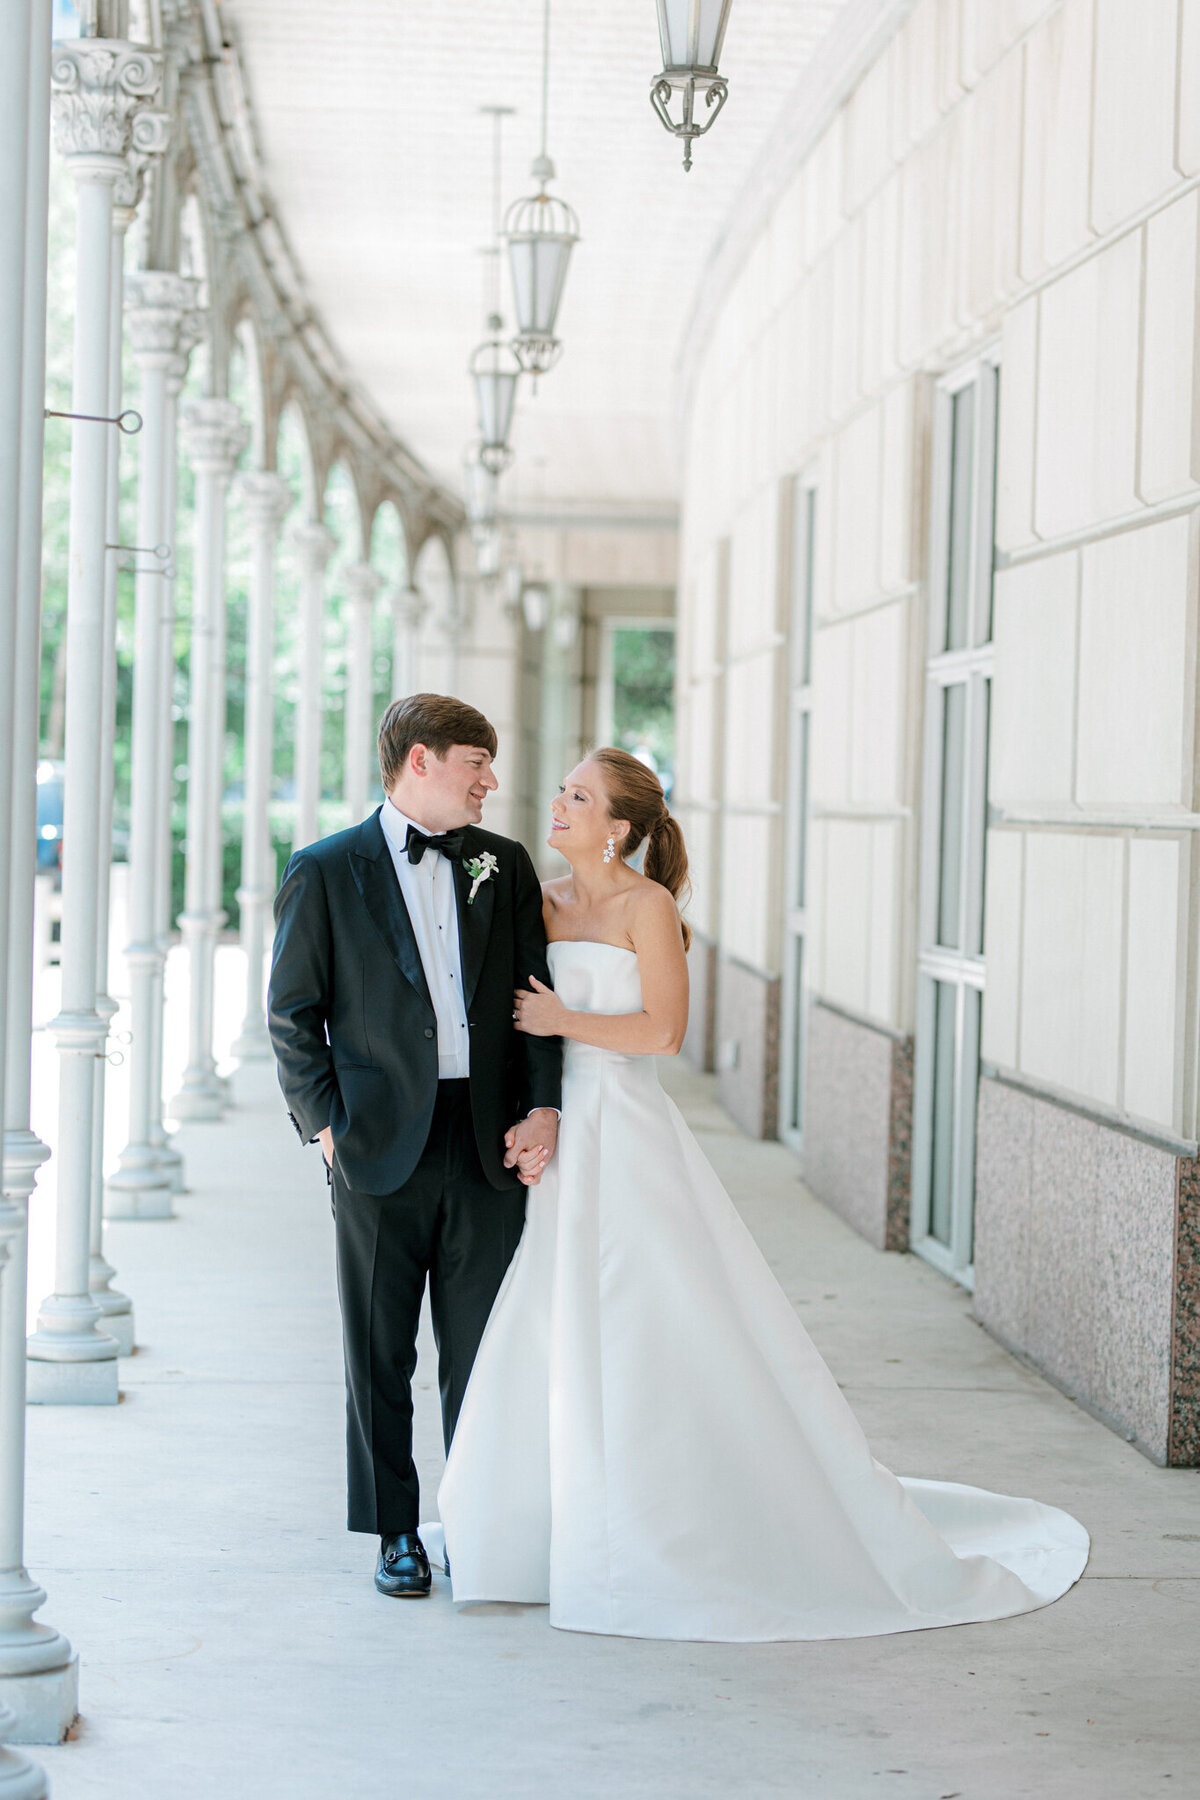 Hannah & Jason's Wedding at Hotel Crescent Court Club Perkins Chapel | Dallas Wedding Photographer | Sami Kathryn Photography-12